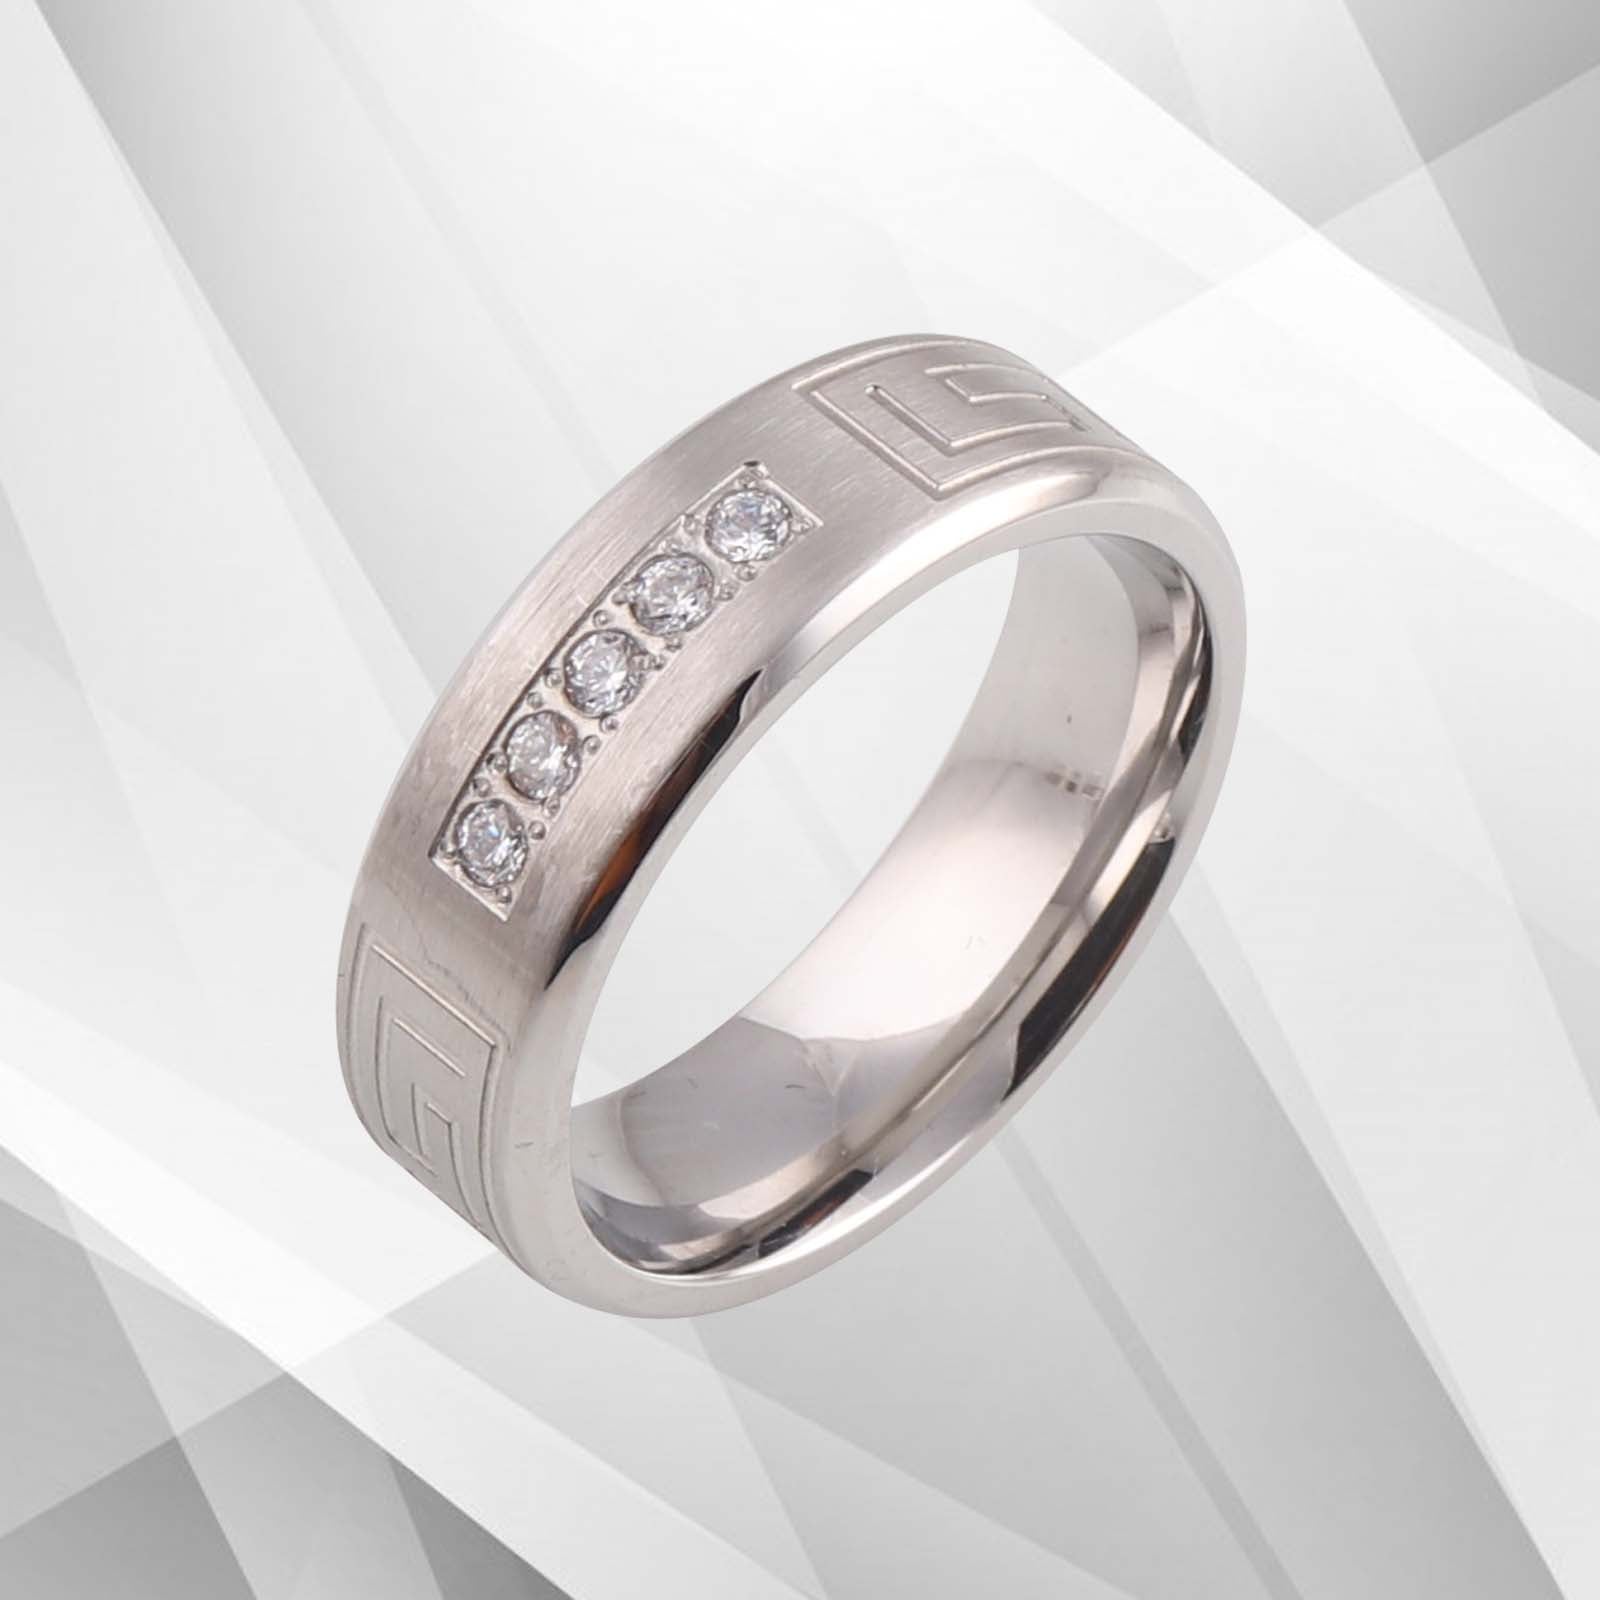 Designer Titanium CZ Diamond Wedding Band Ring - 7mm Flat Shape, 18Ct White Gold Finish, Comfort Fit for Women Bijou Her